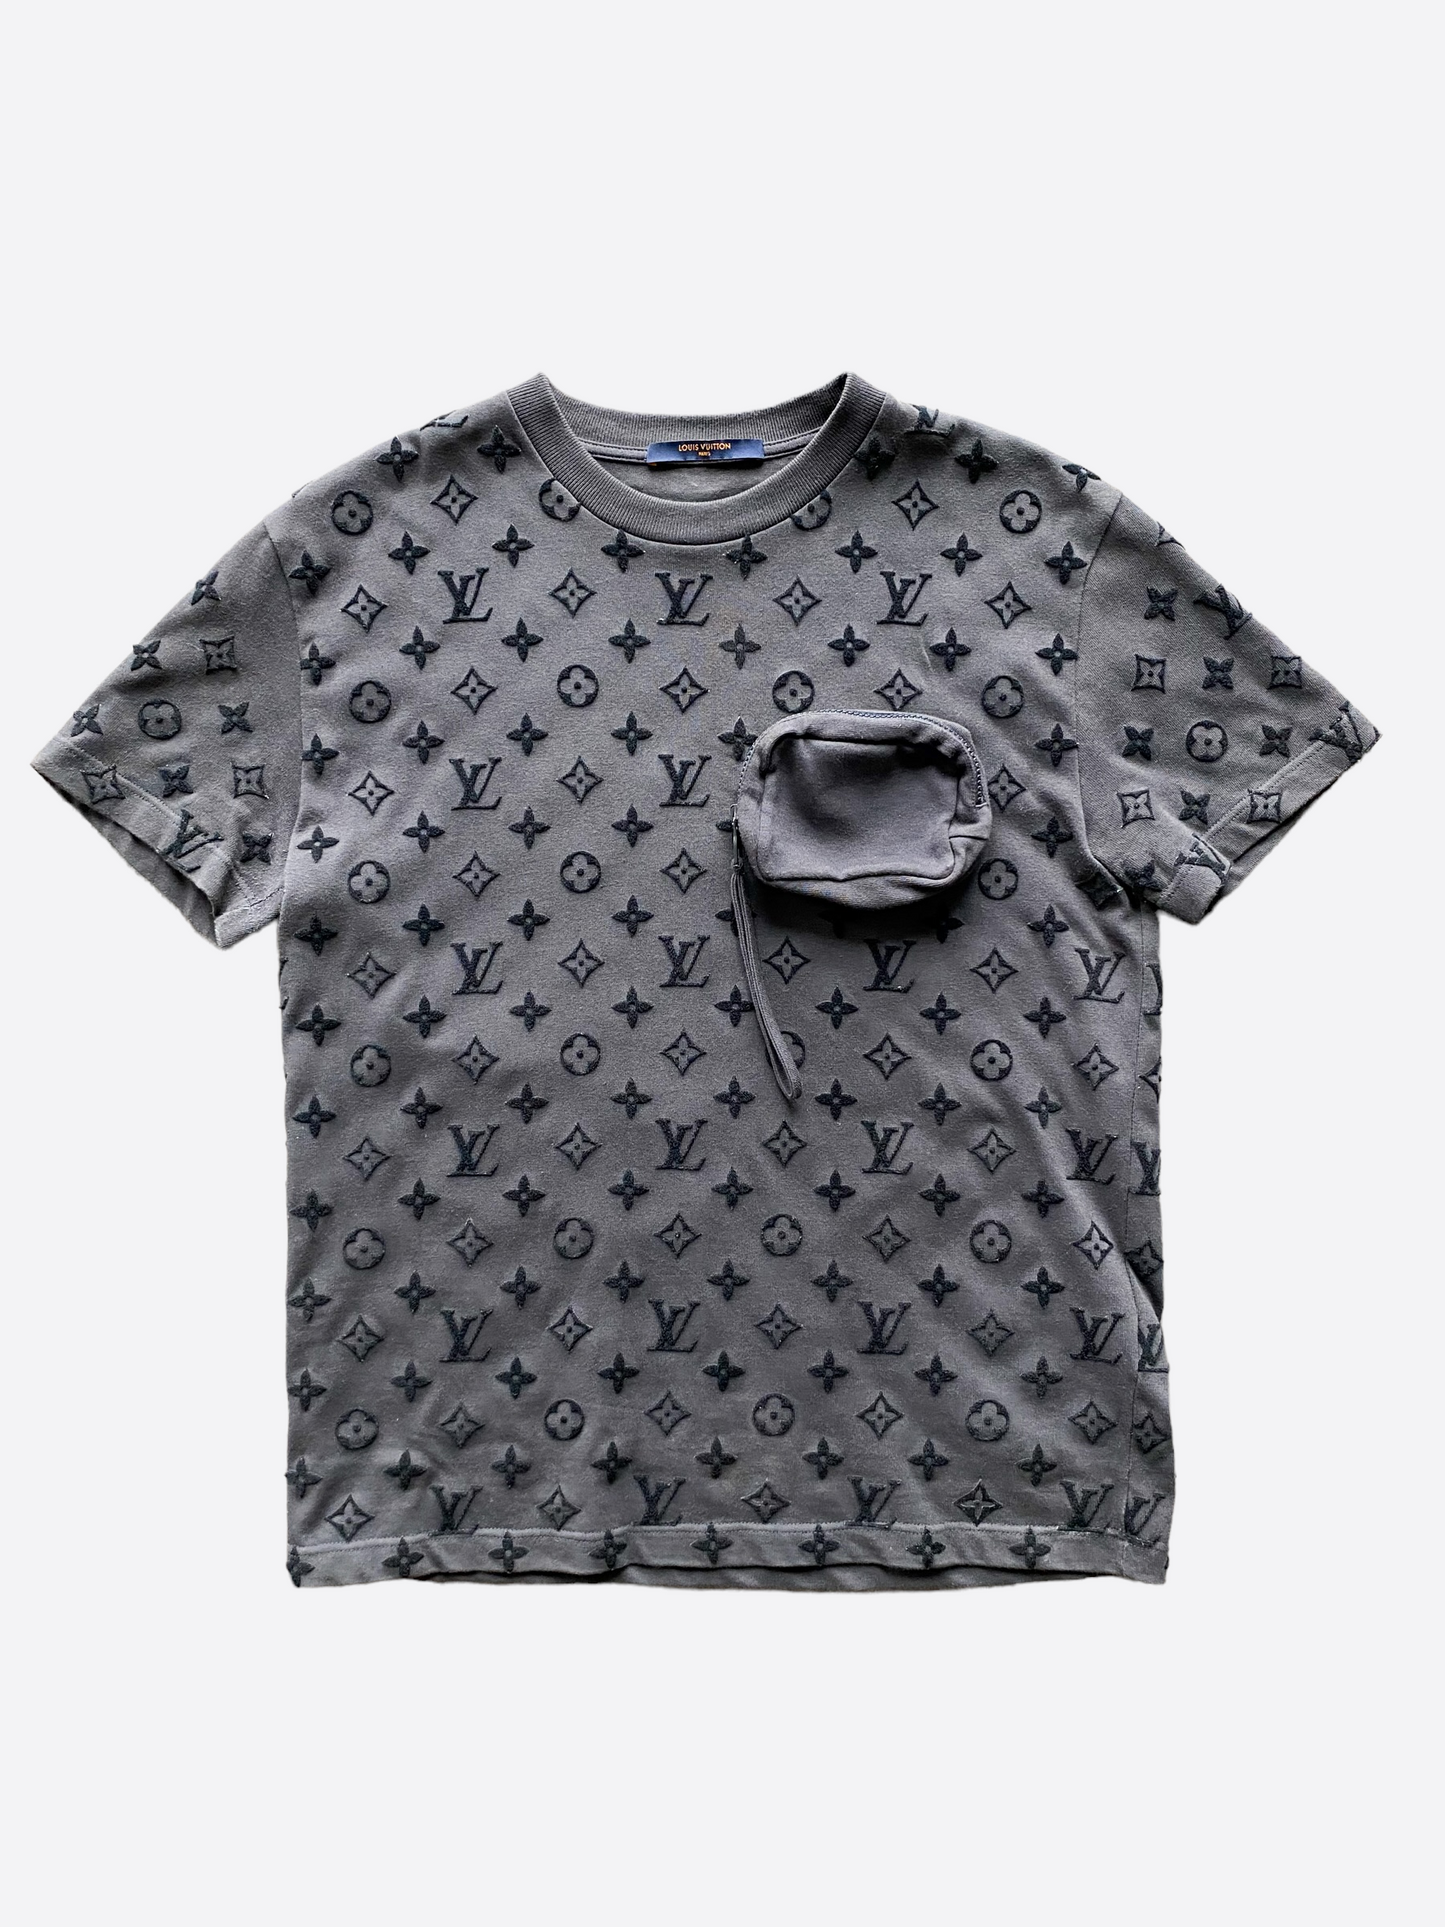 Louis Vuitton Short Sleeve Regular Size T-Shirts for Men for sale